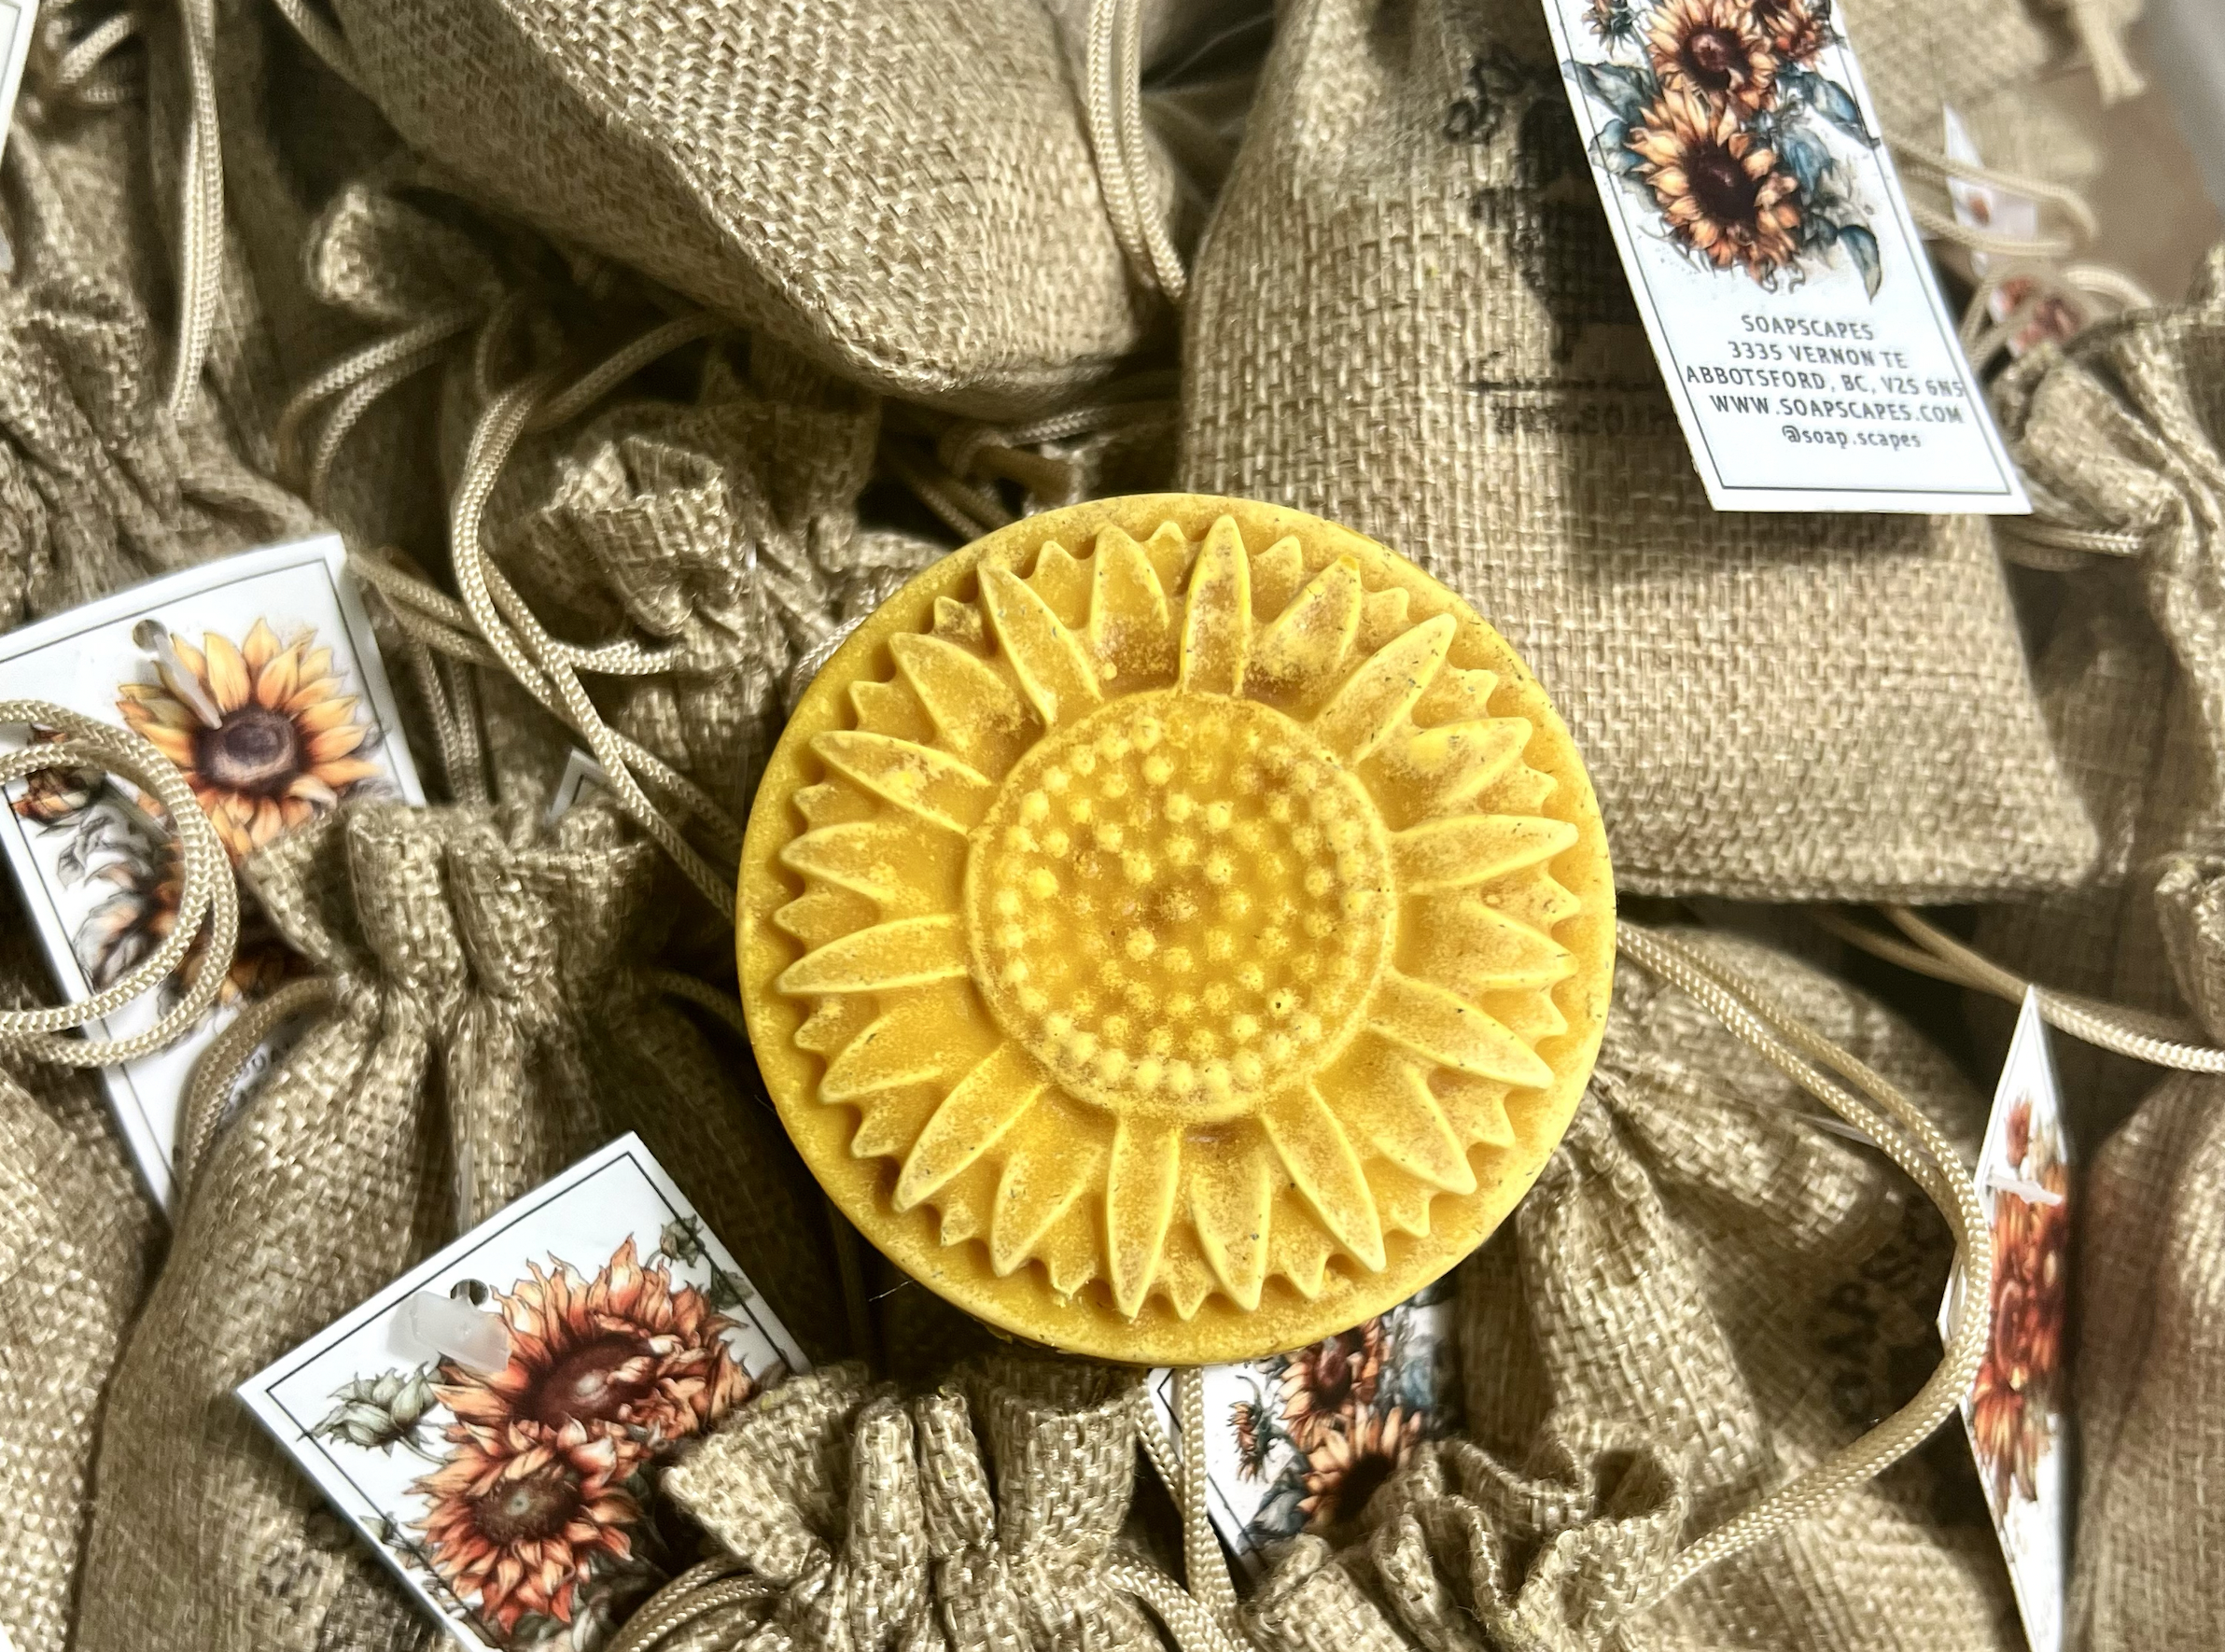 Dragana Skoro SoapScapes Natural Craft Small Batch Artisanal Soap Producer Company in Abbotsford British Columbia Canada 37498